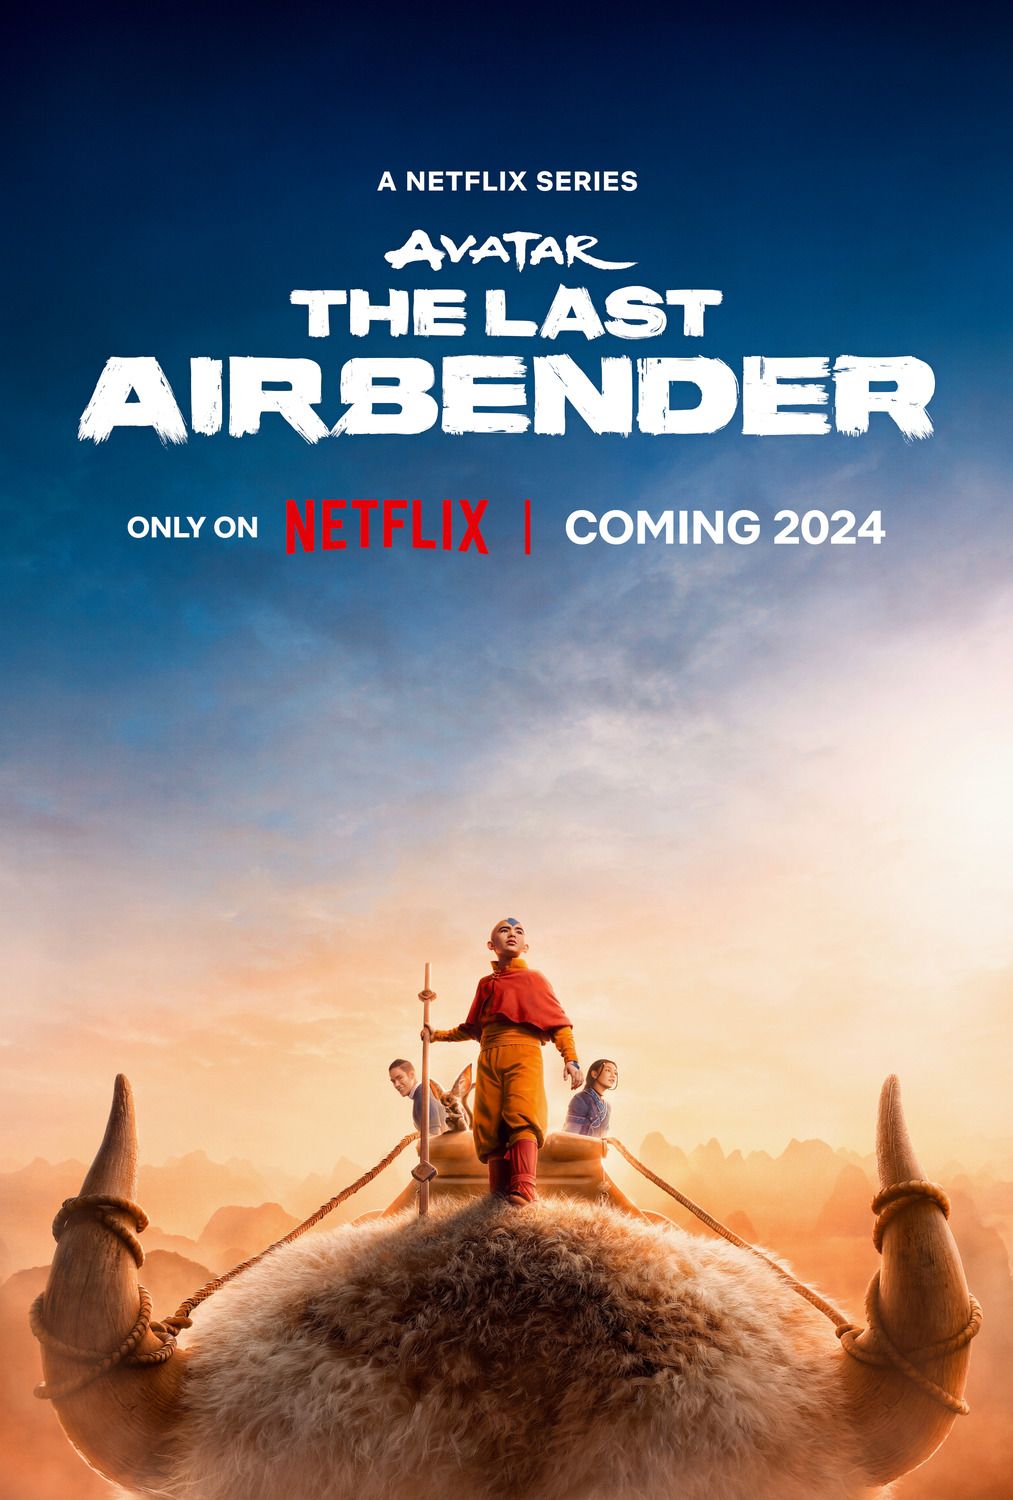 Avatar The Last Airbender Season 1 Ending, Explained